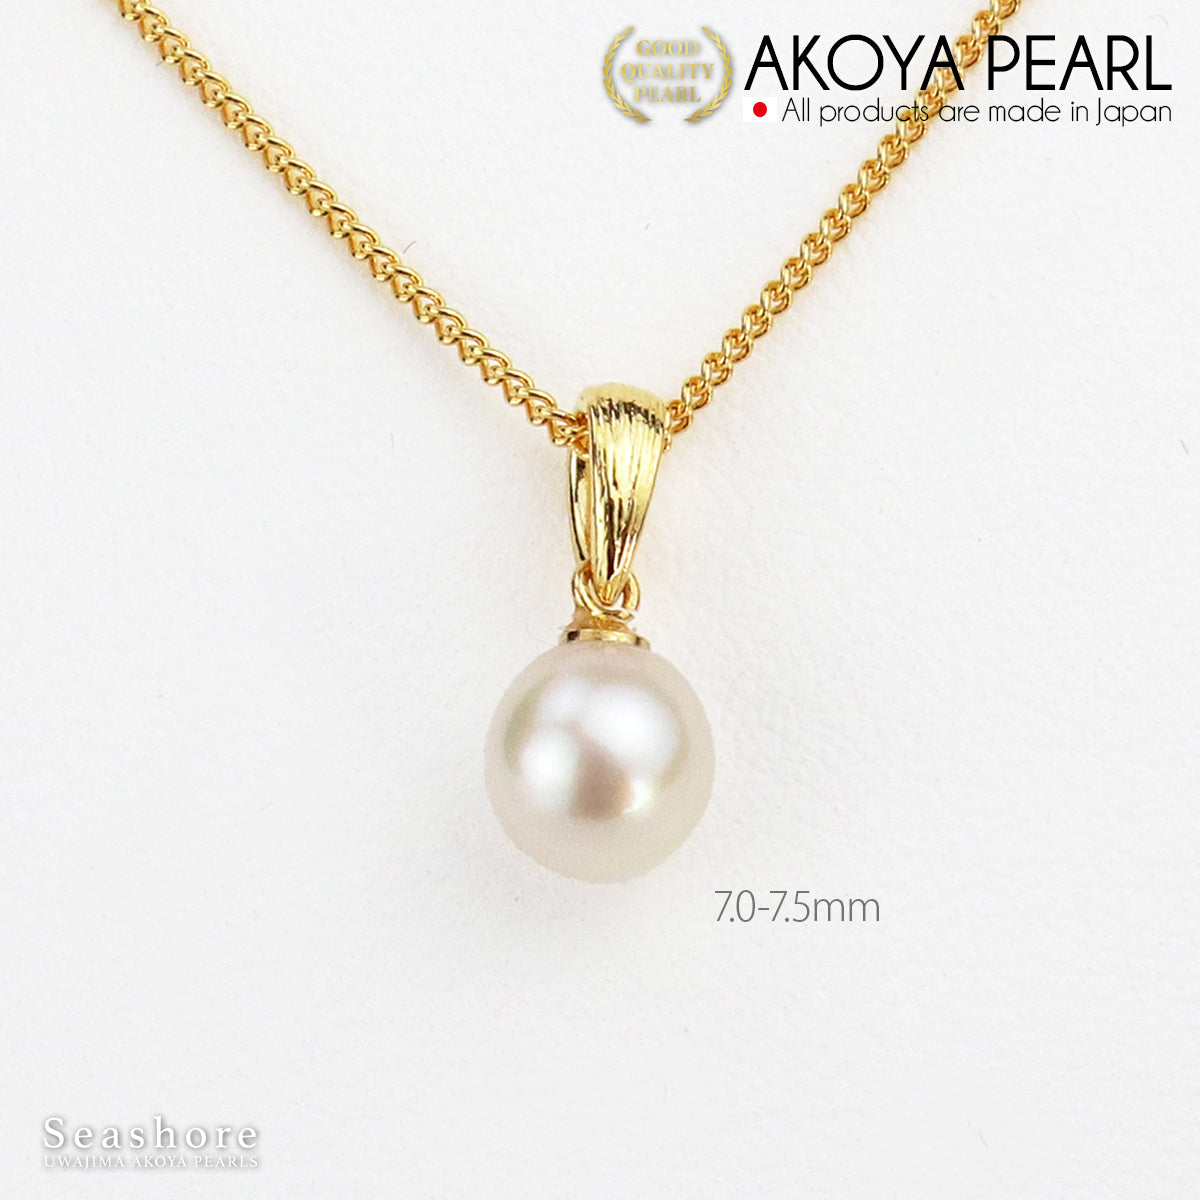 Akoya珍珠梵蒂冈吊坠 [7.0-7.5mm] 黄铜《银/金》珍珠项链